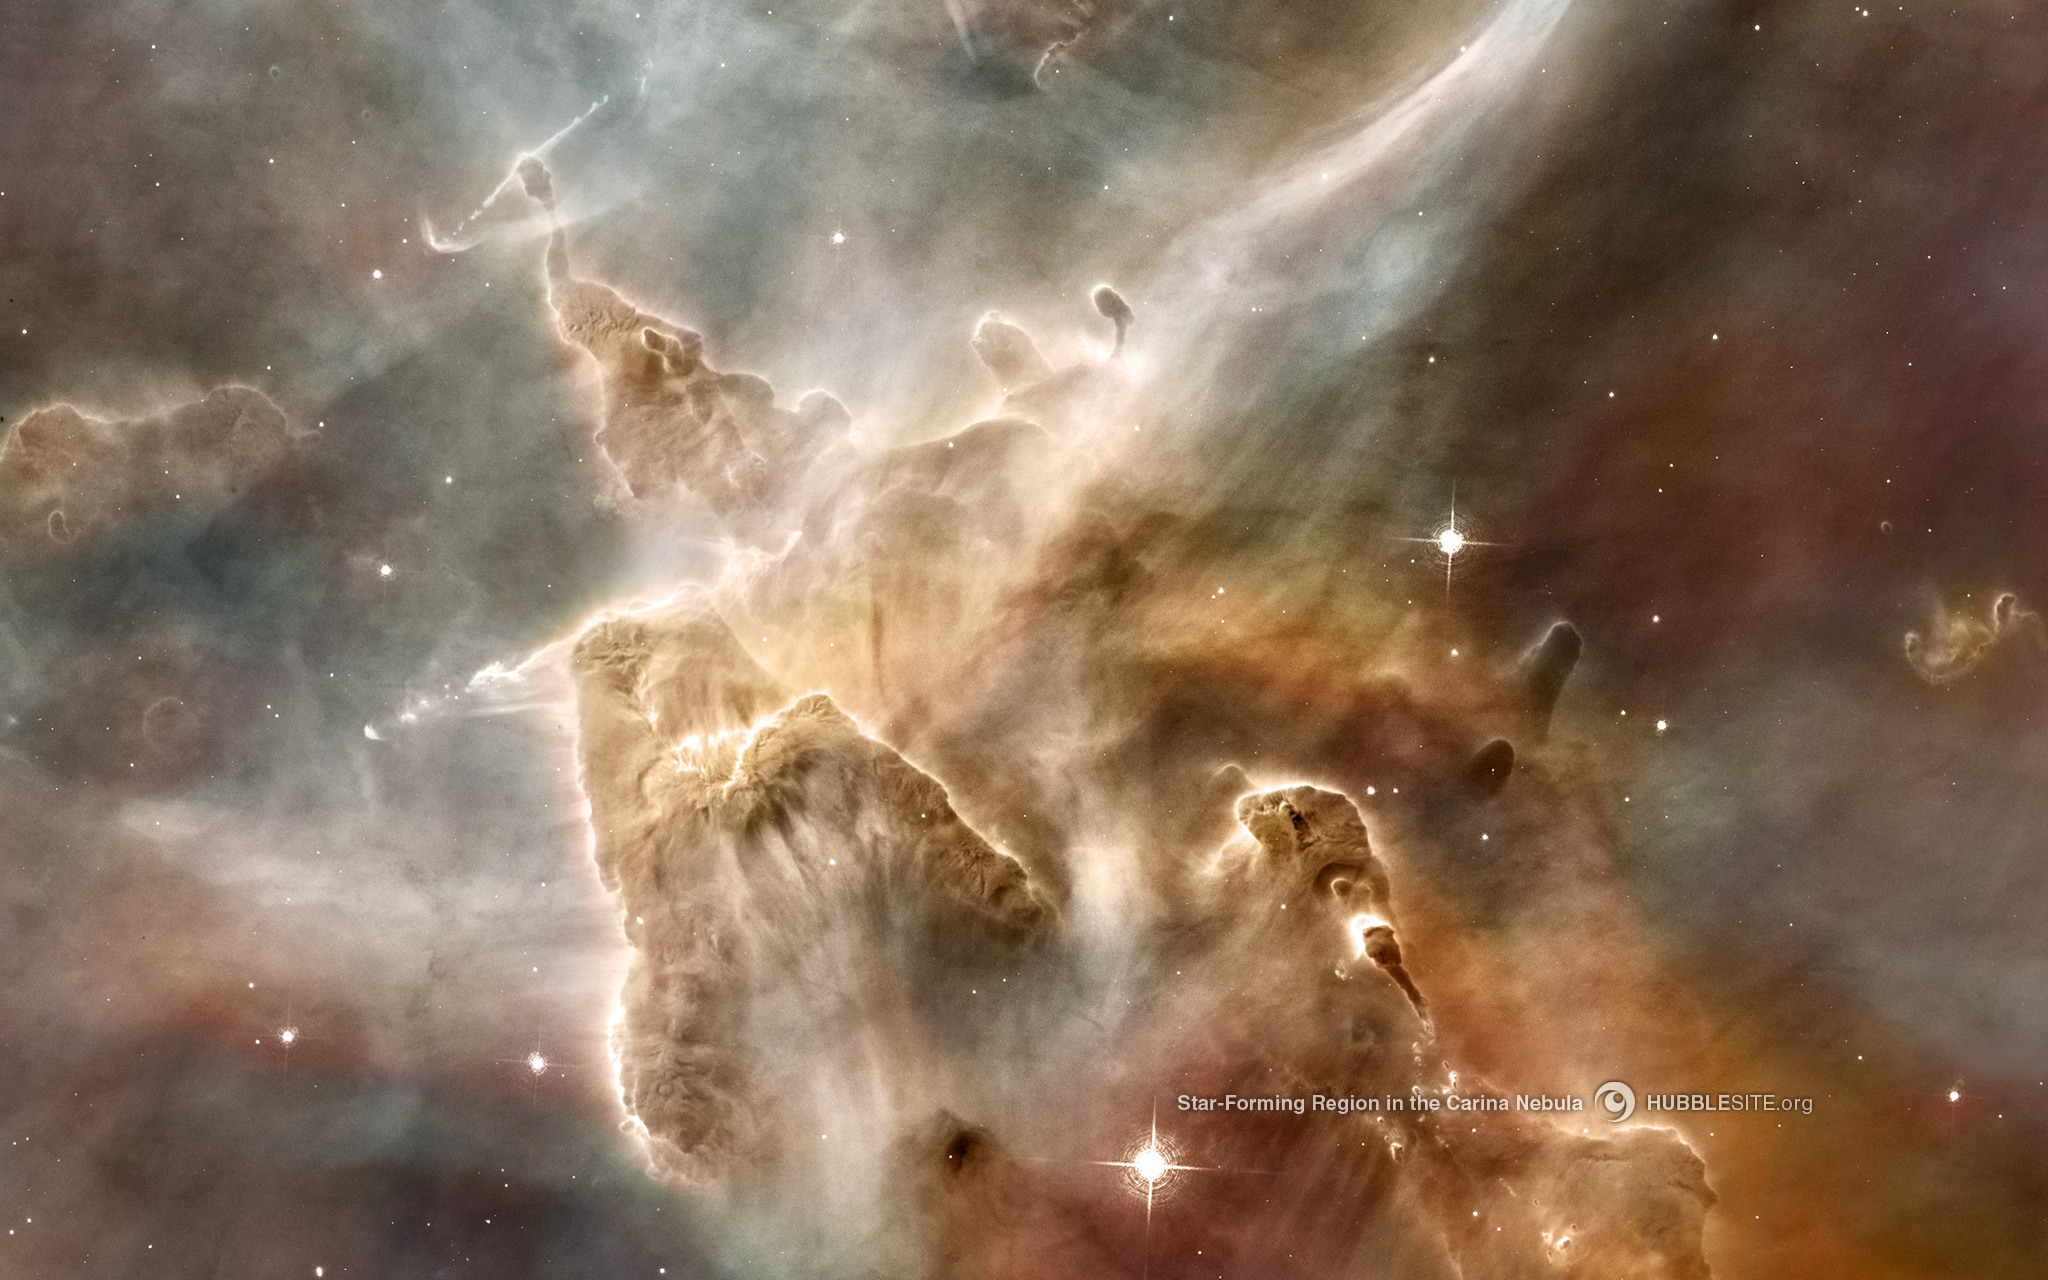 Star-Forming Region in the Carina Nebula